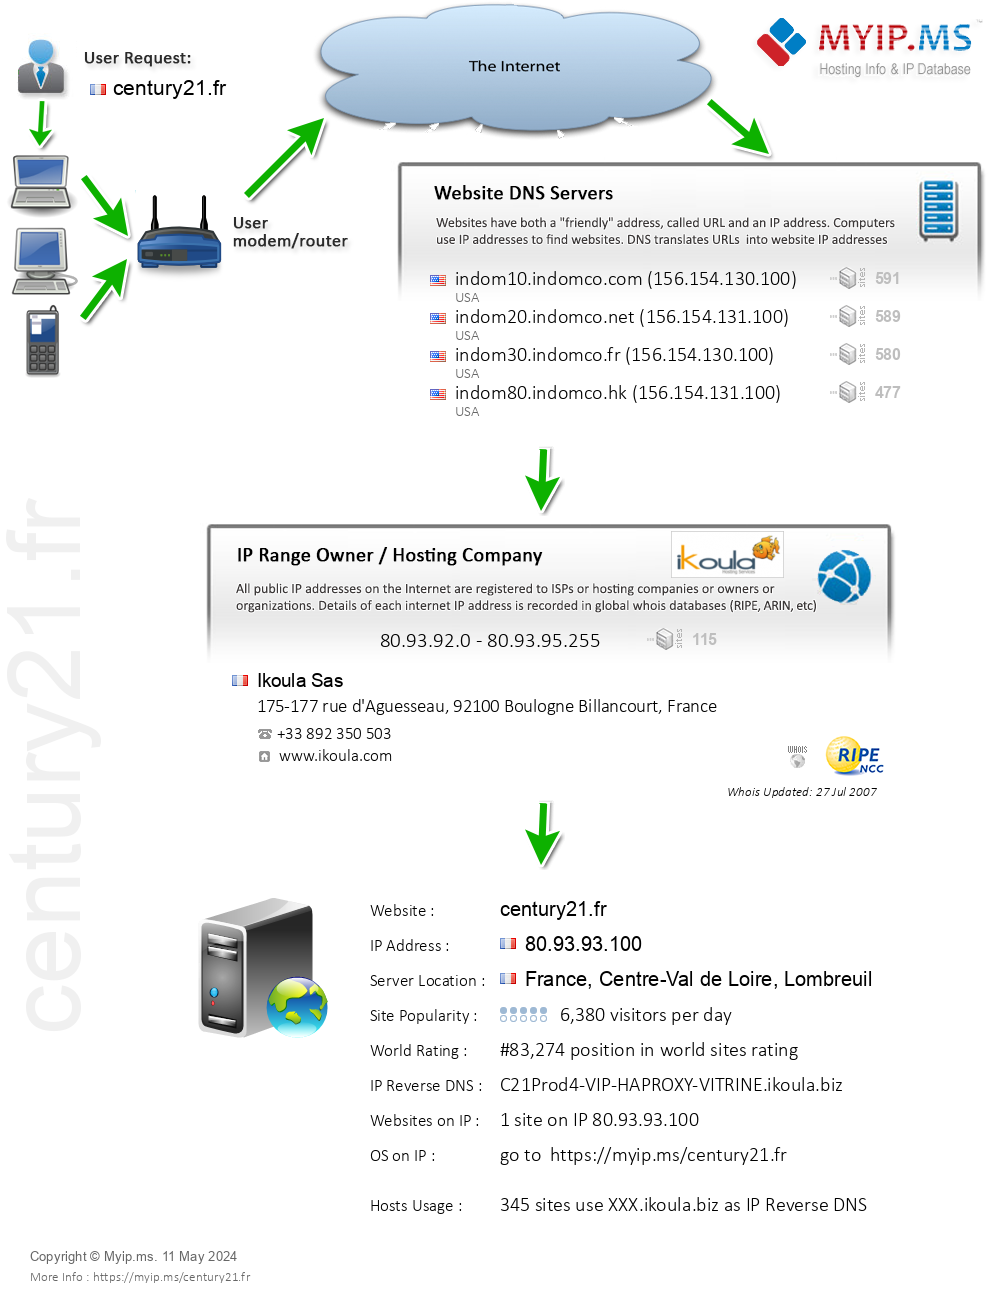 Century21.fr - Website Hosting Visual IP Diagram